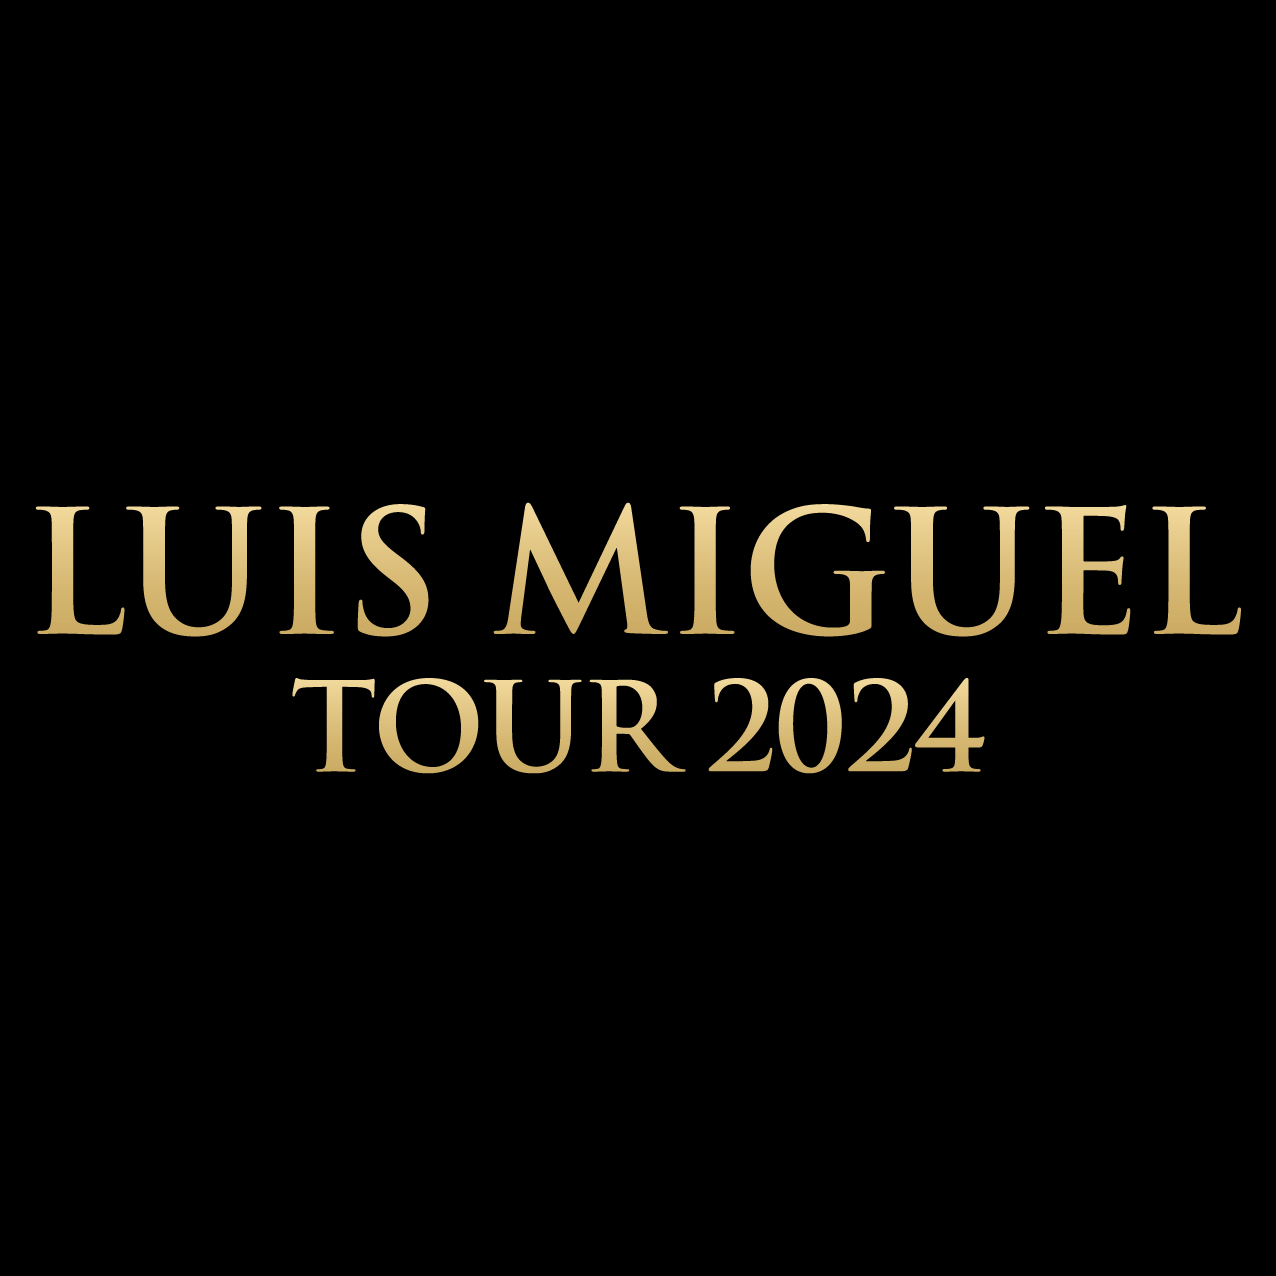 TOUR 2024 Luis Miguel Official Merchandising